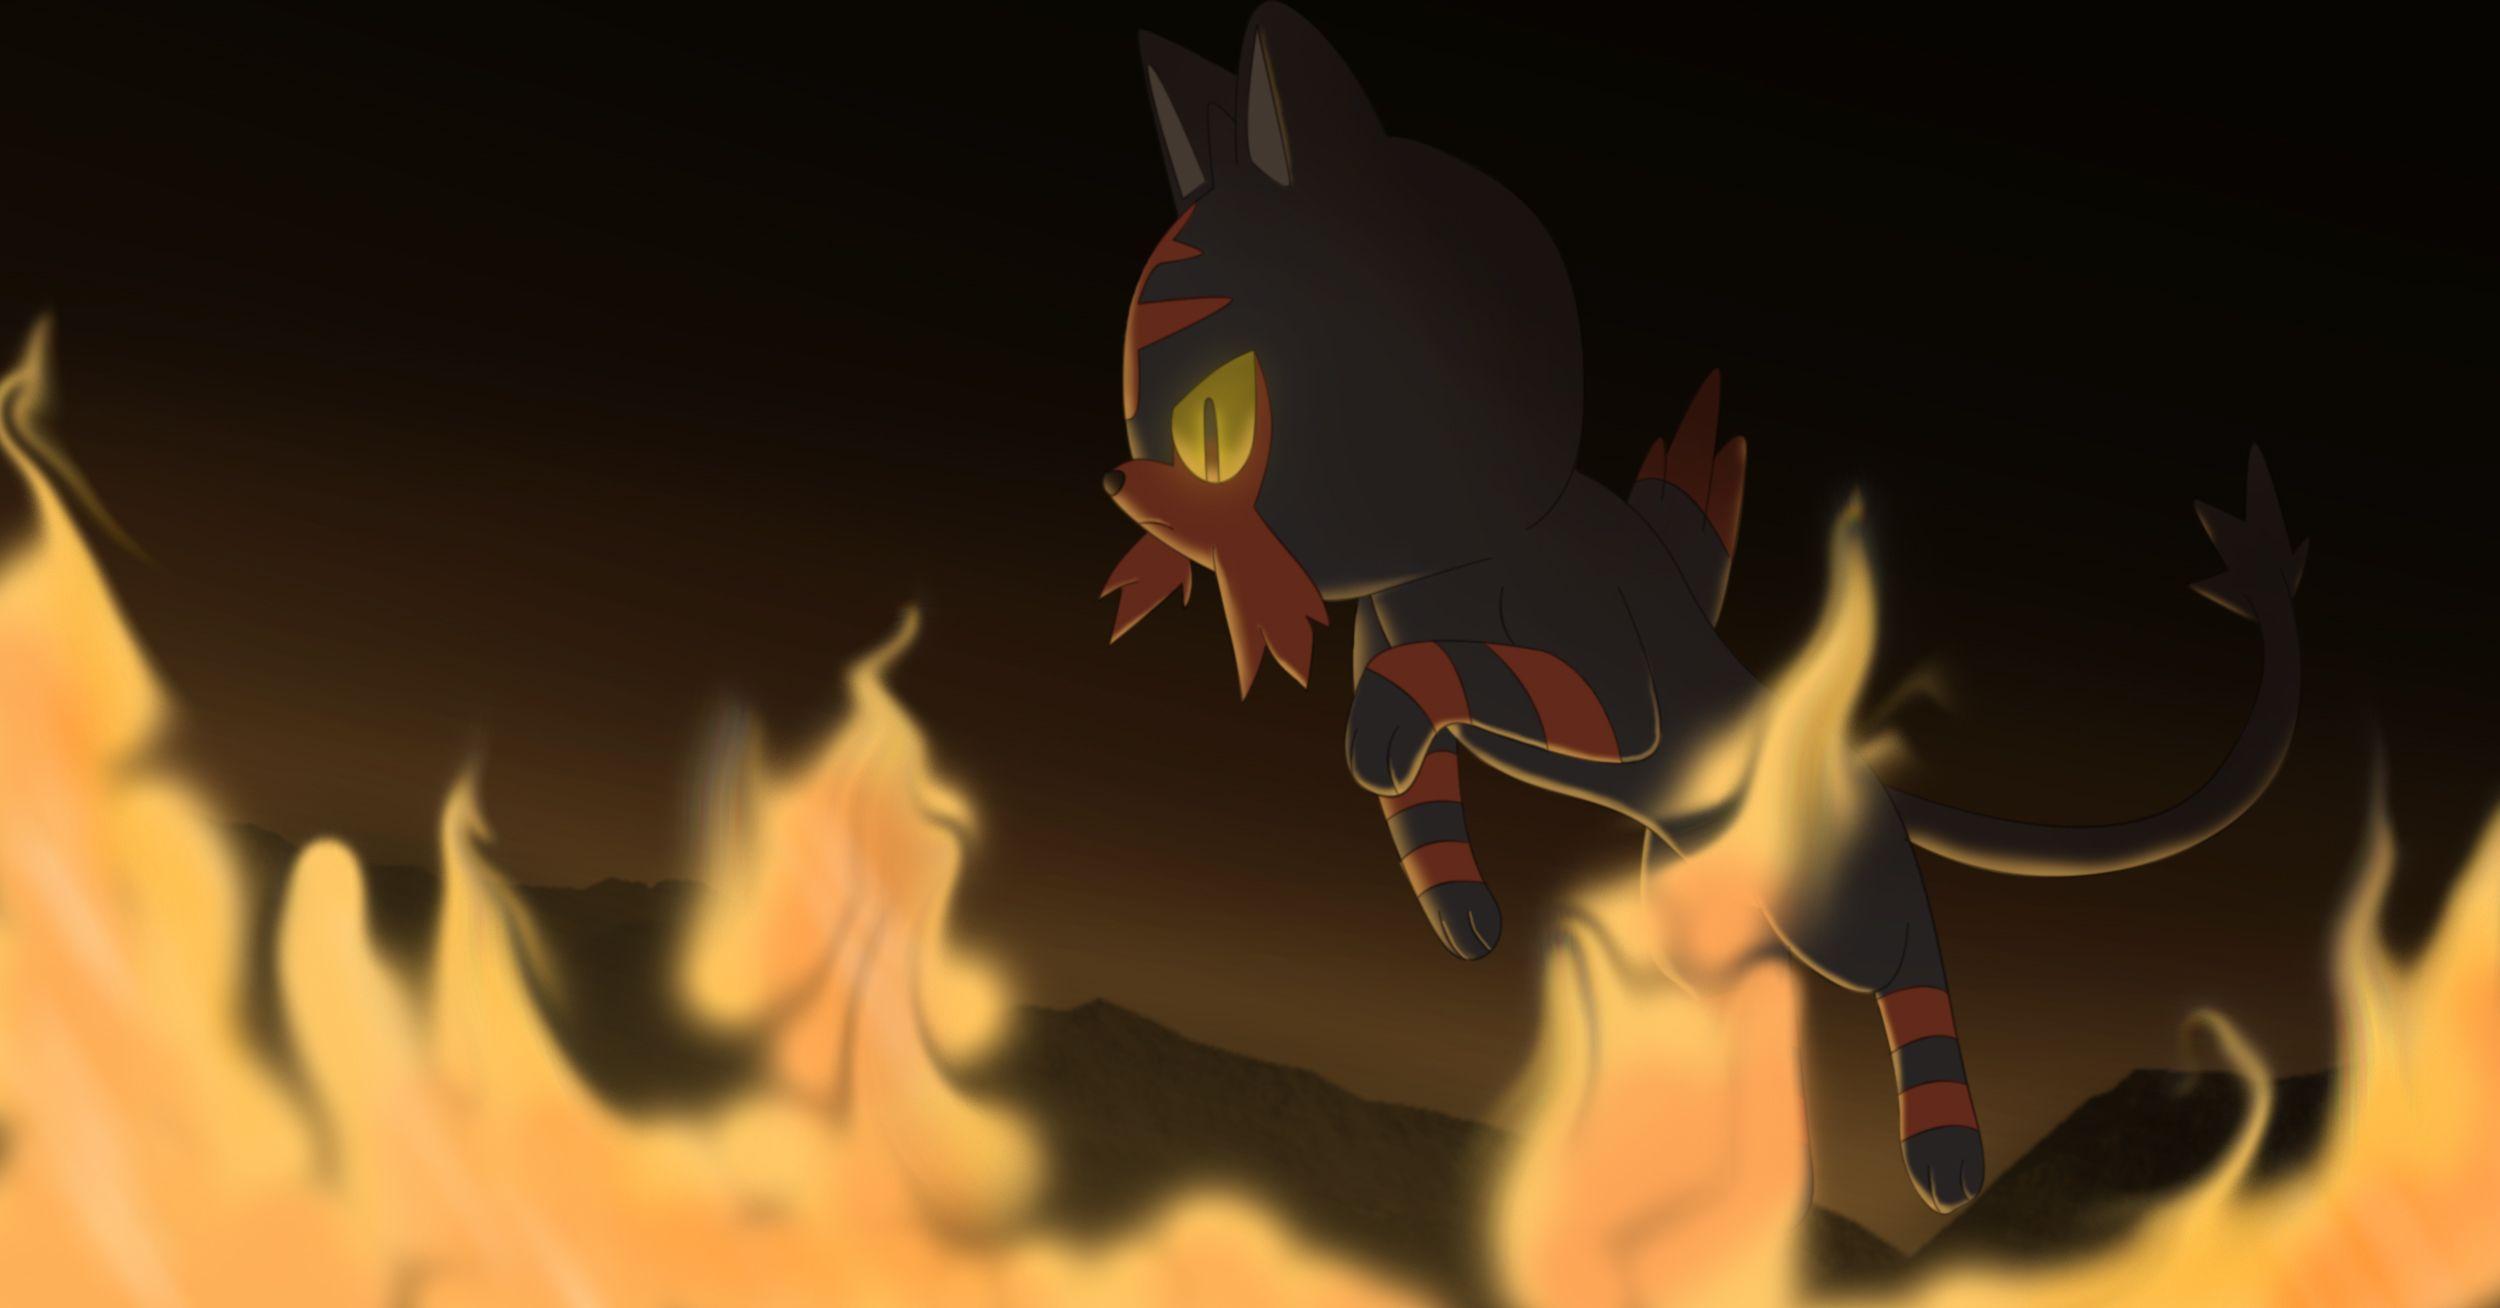 Litten (Pokémon) HD Wallpaper and Background Image